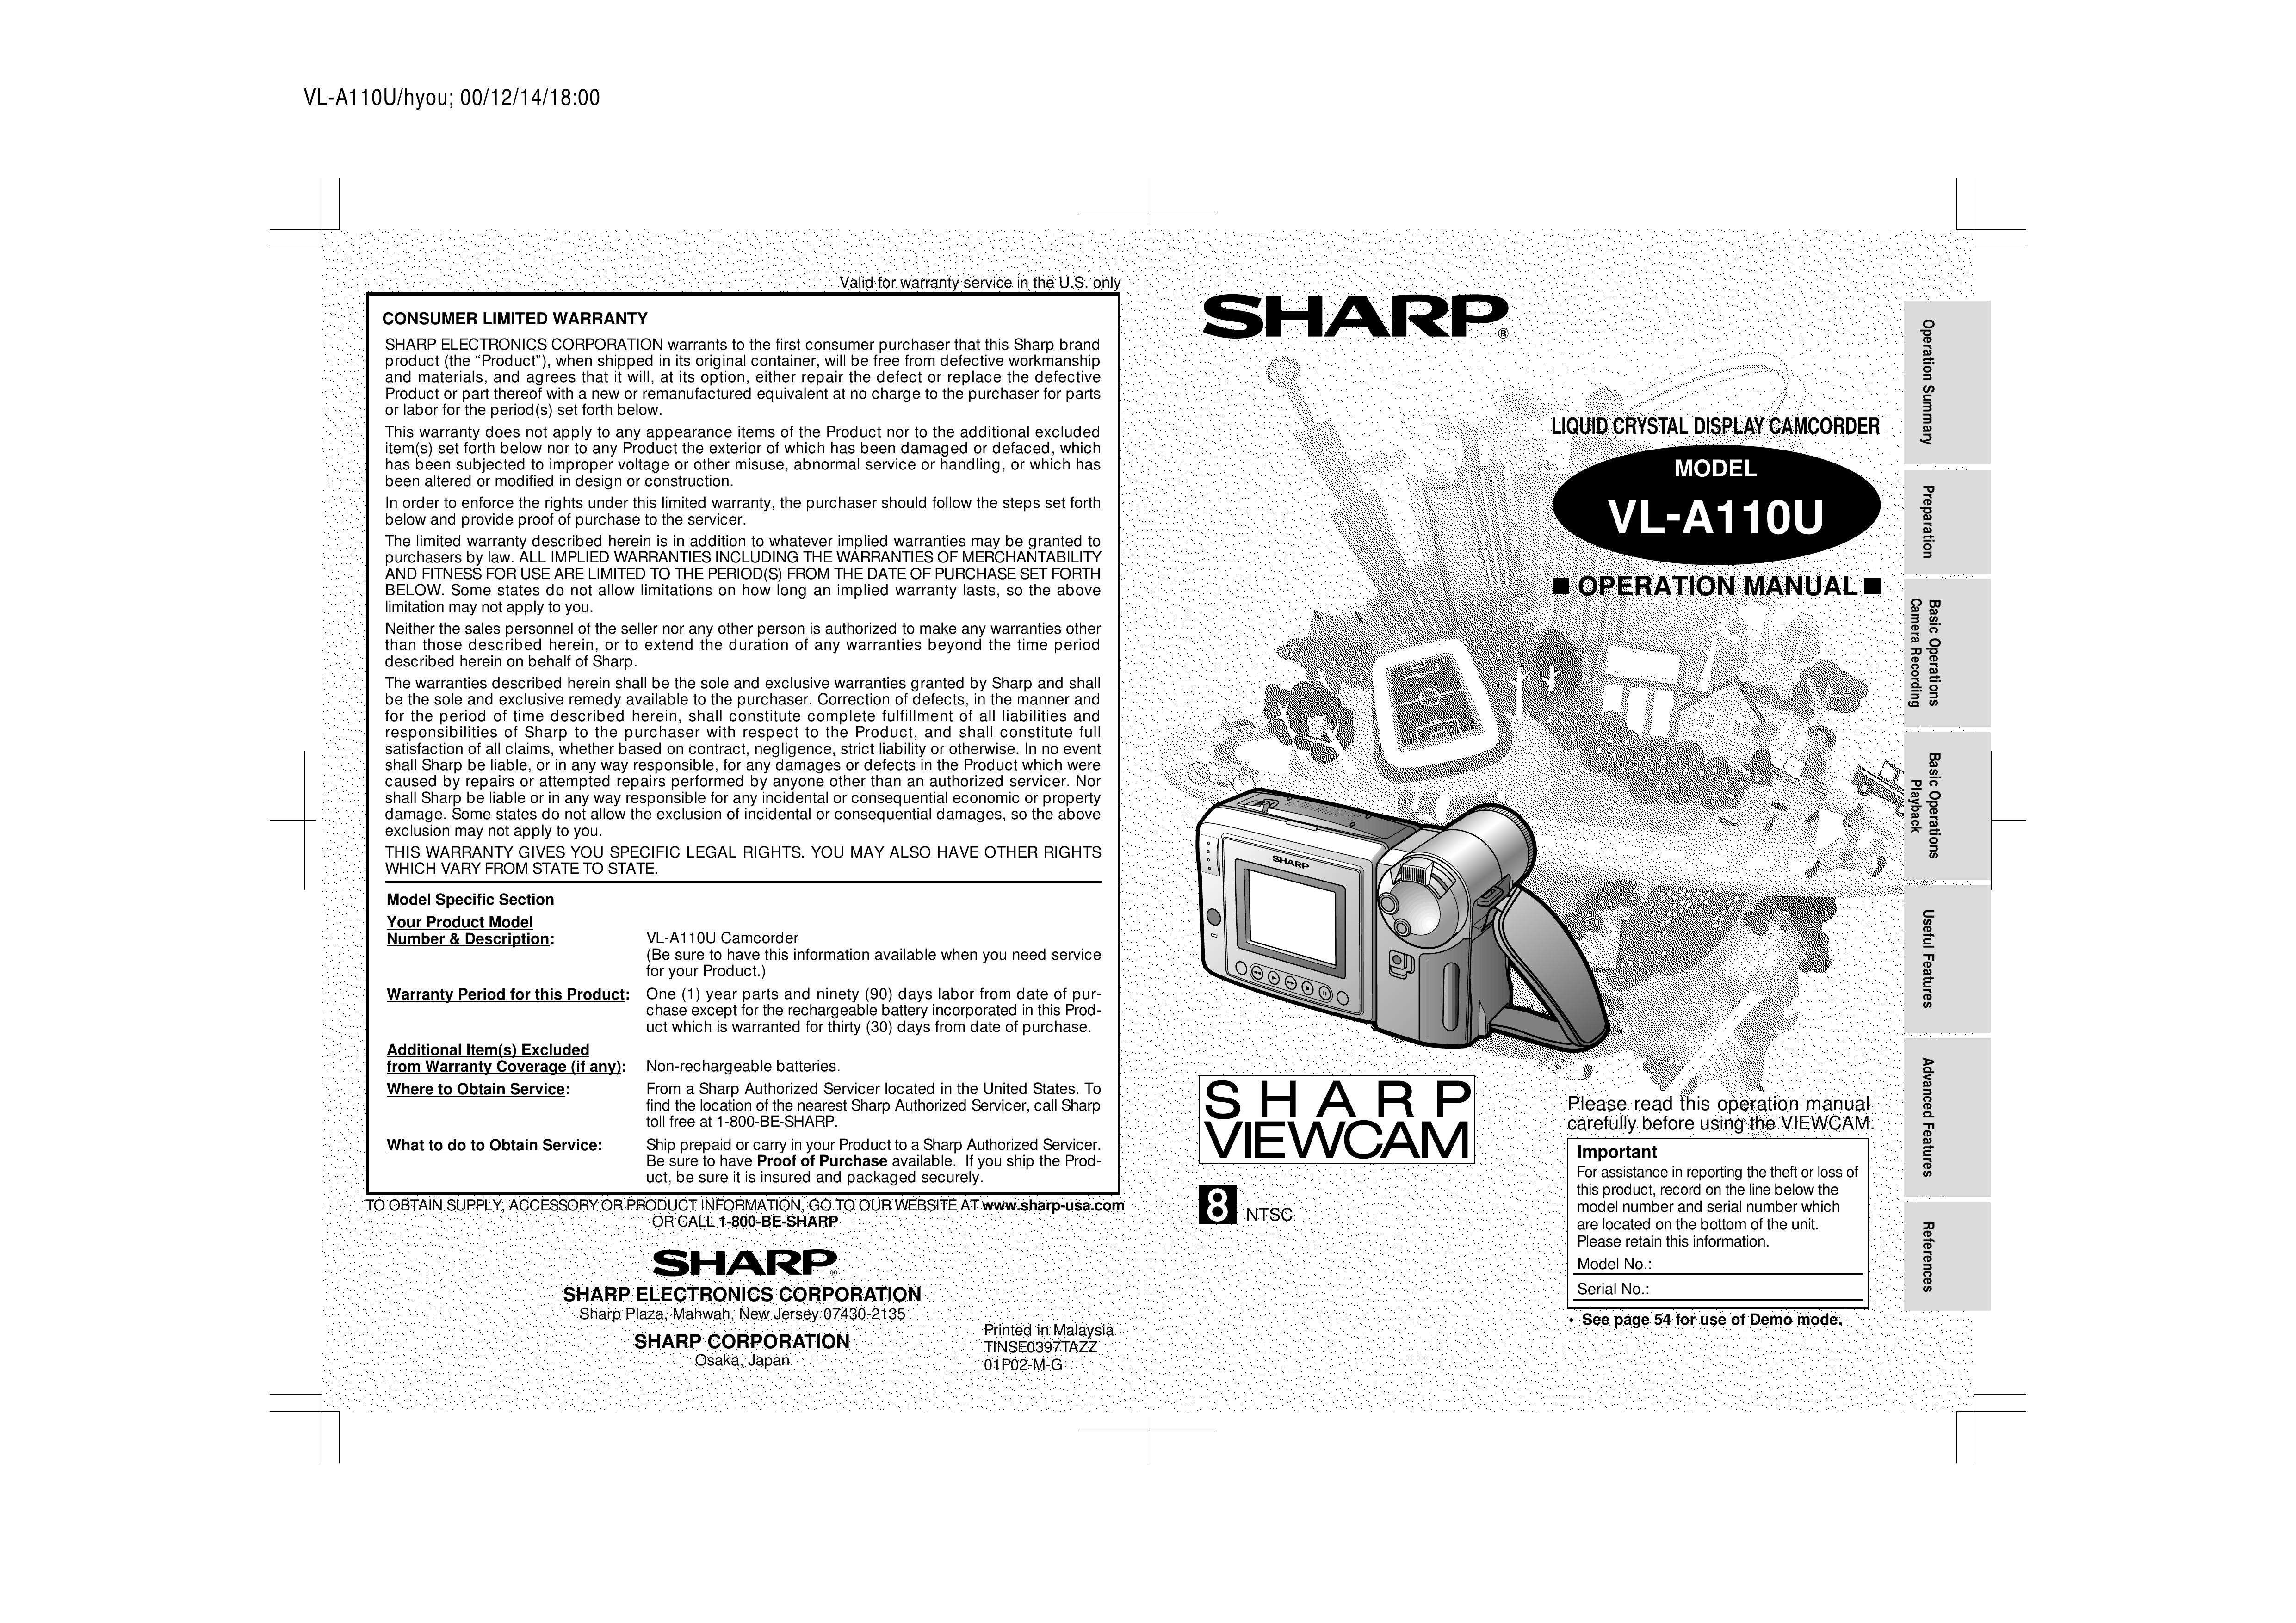 Sharp VL-A110U Camcorder User Manual